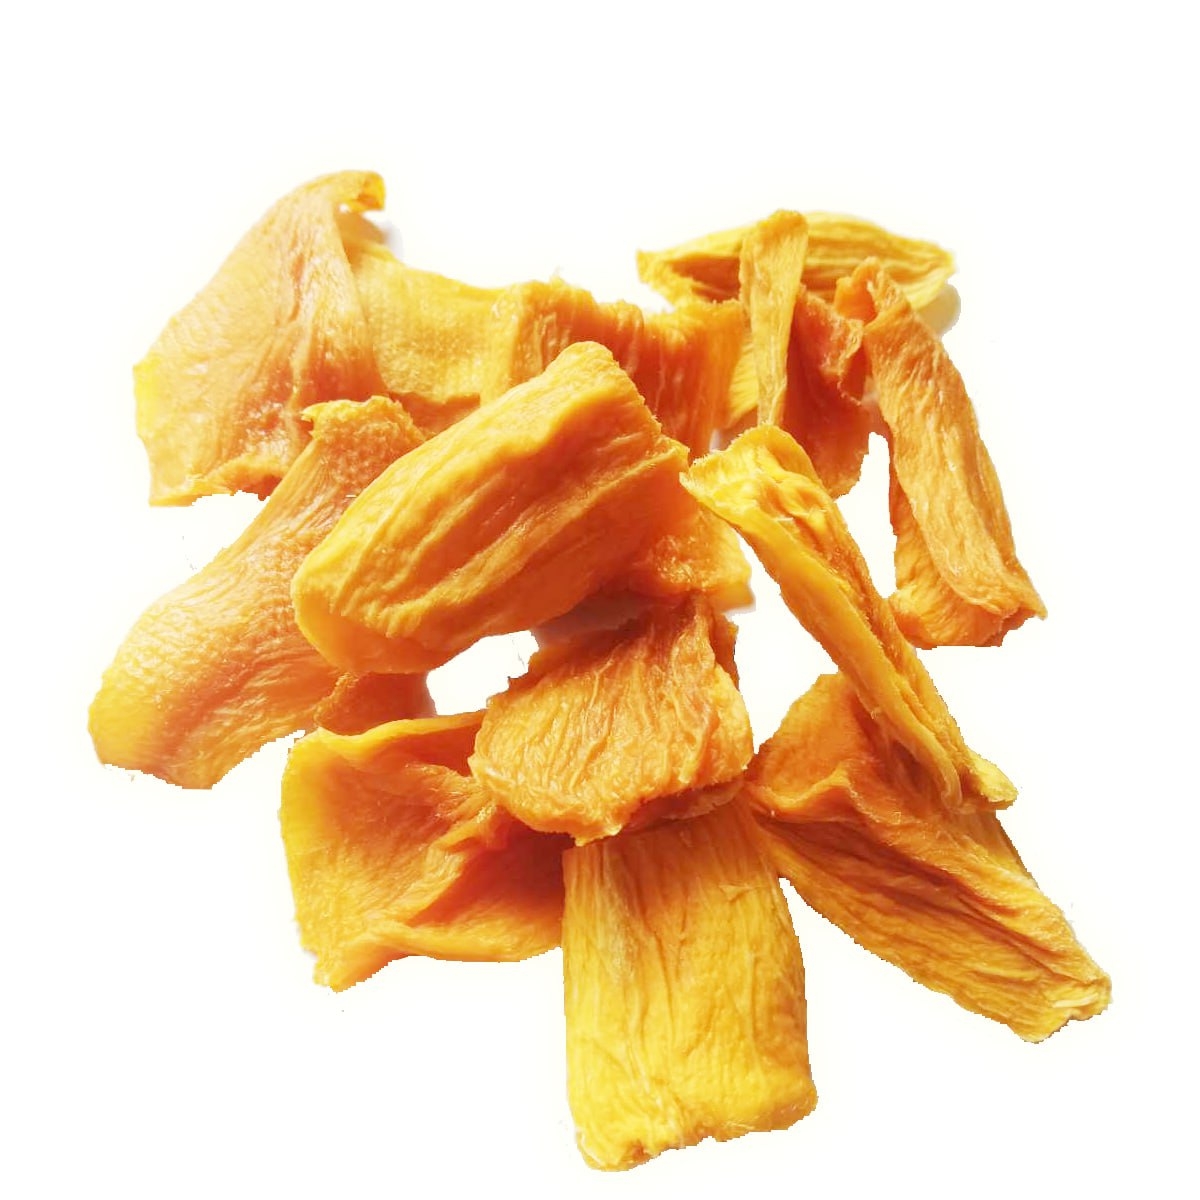 Kirirom Dried Mango No Sugar * 1000g * 1KG